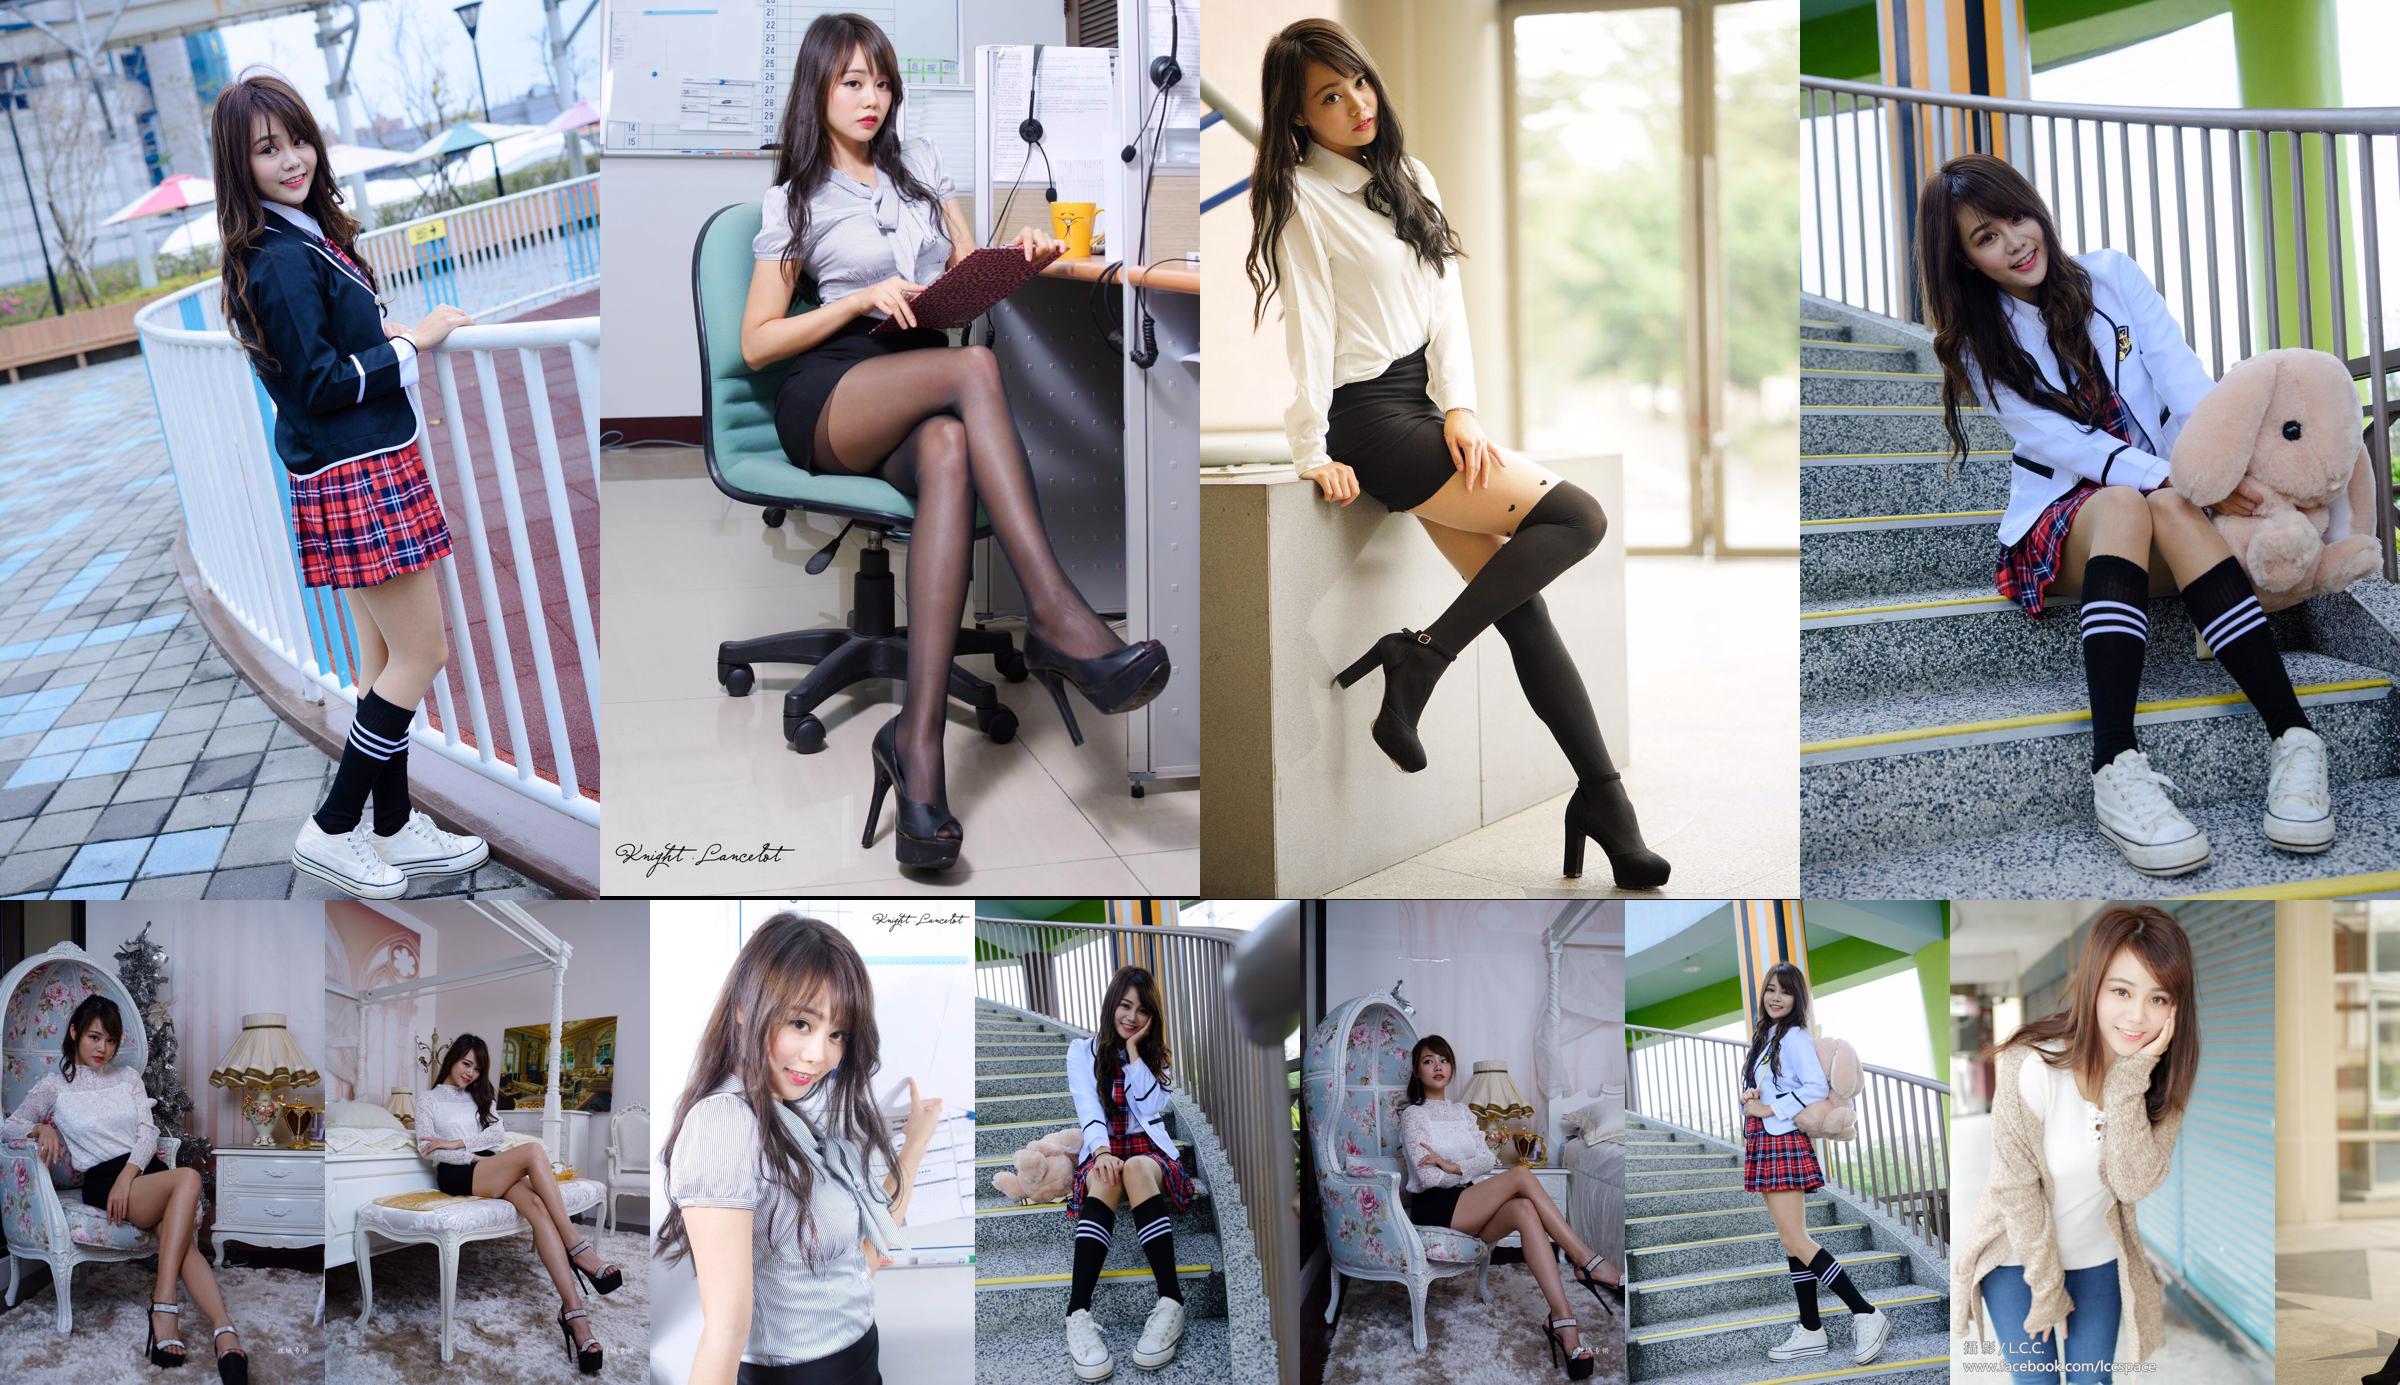 [Taiwan Internet celebrity beauty] Candy Sun Huitong "Asian University Outdoor Shooting" No.106906 Page 1